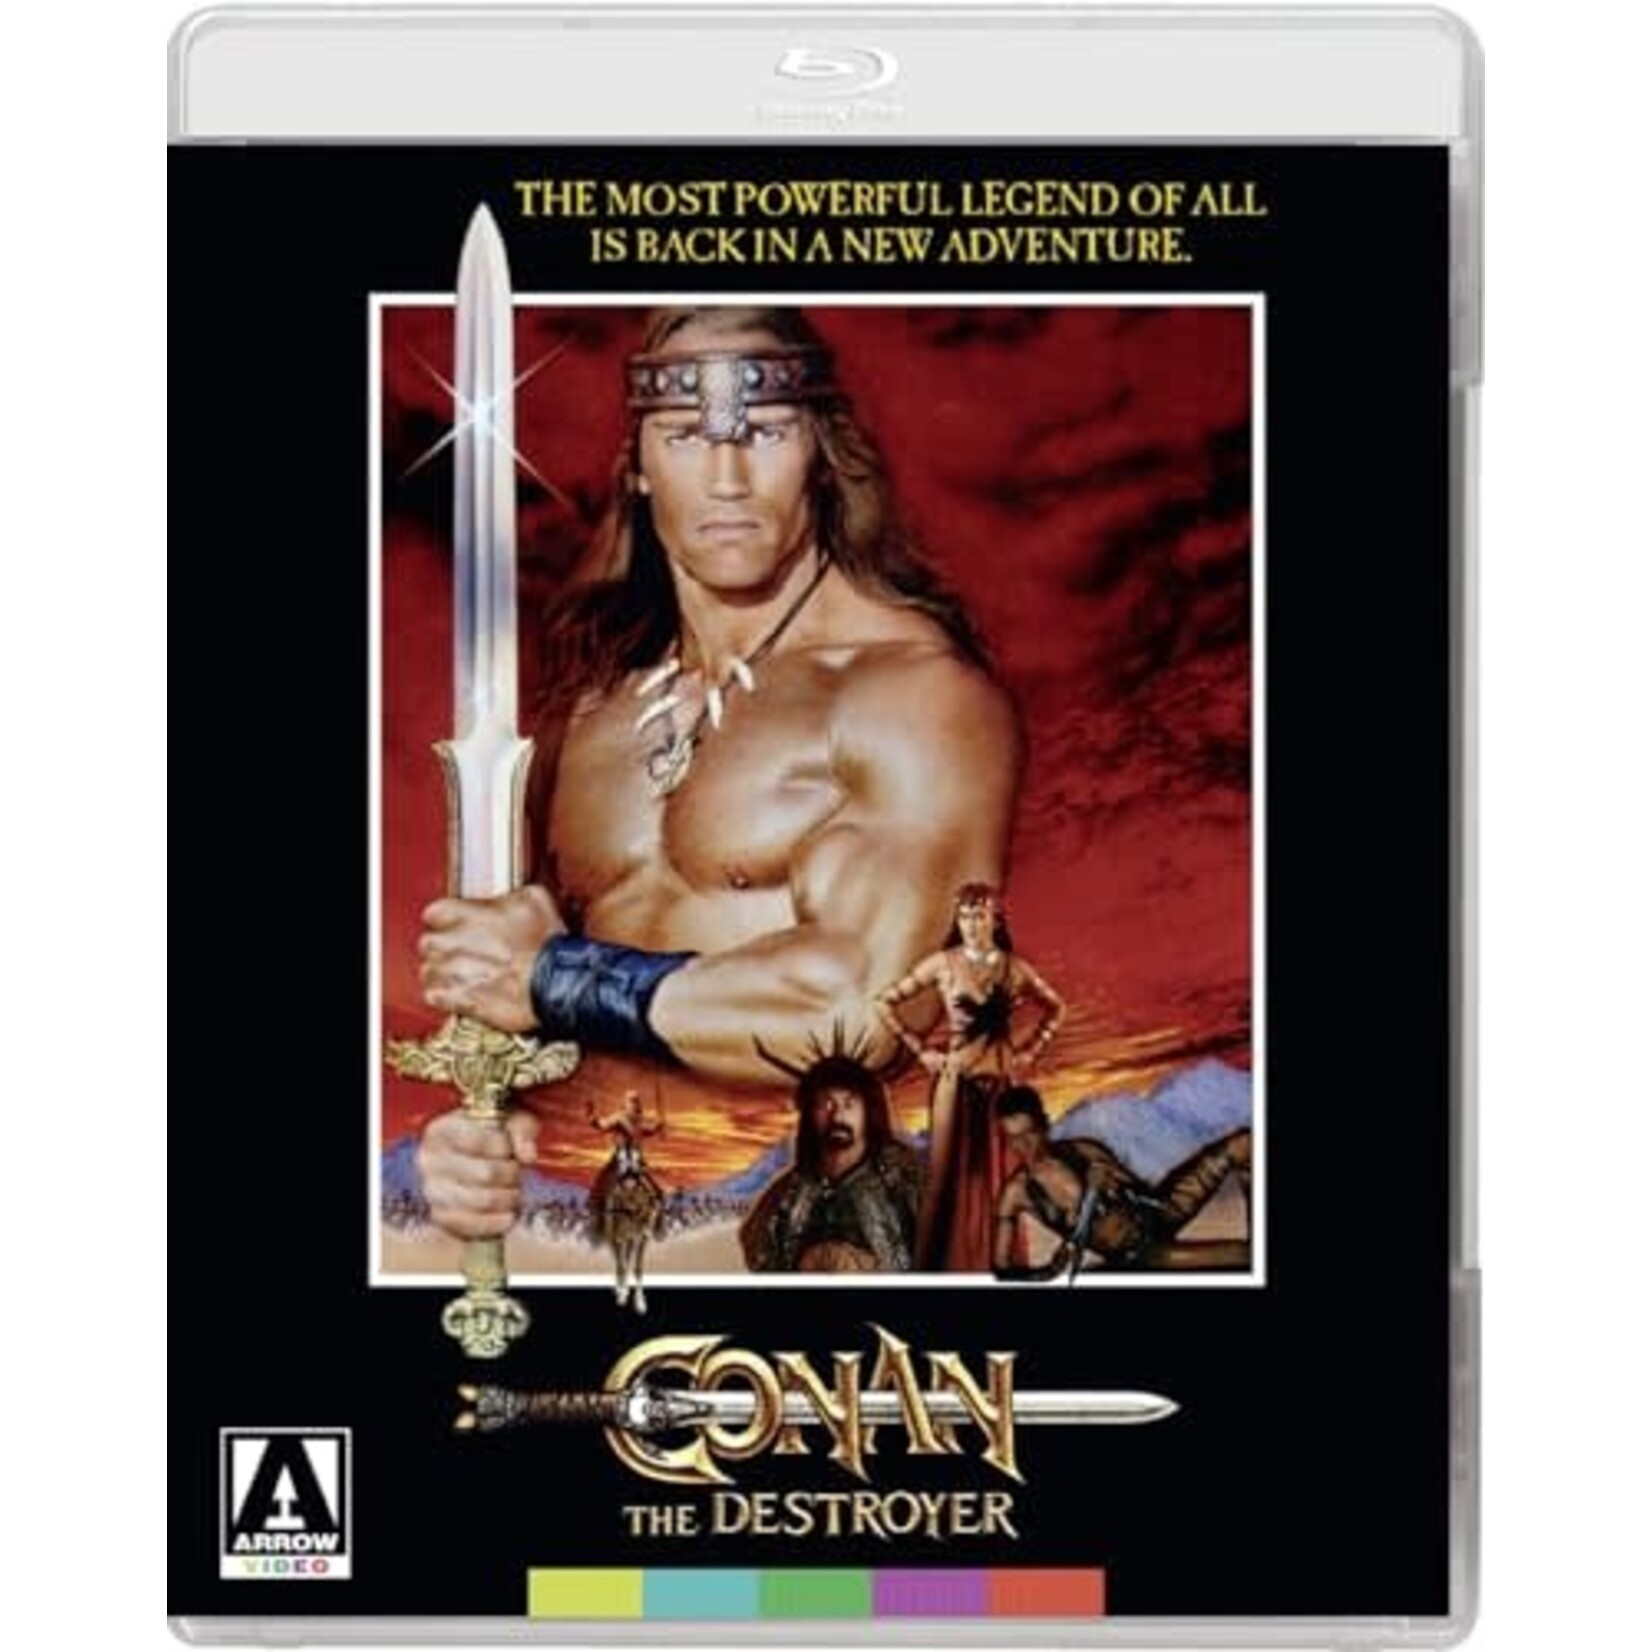 Conan The Destroyer (1984) [BRD]